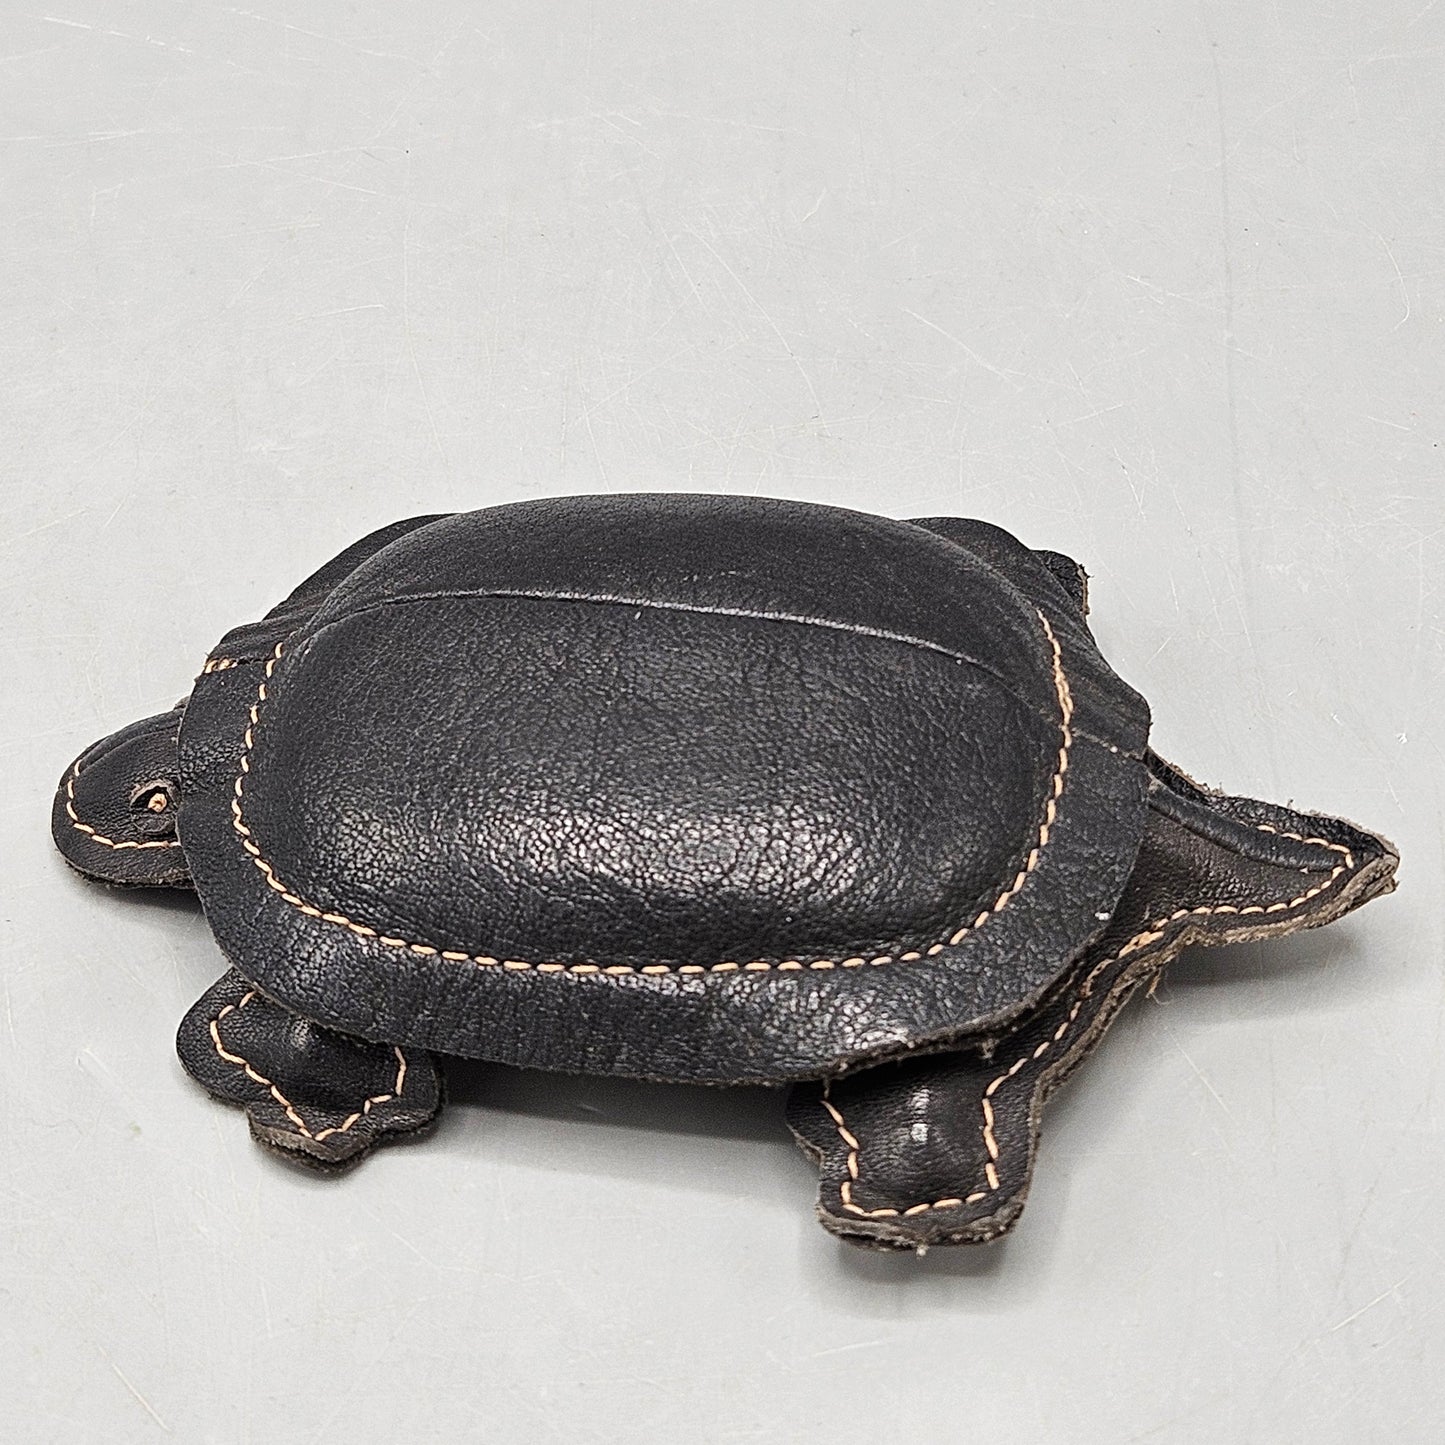 Vintage Mundi Leather Turtle Paperweight